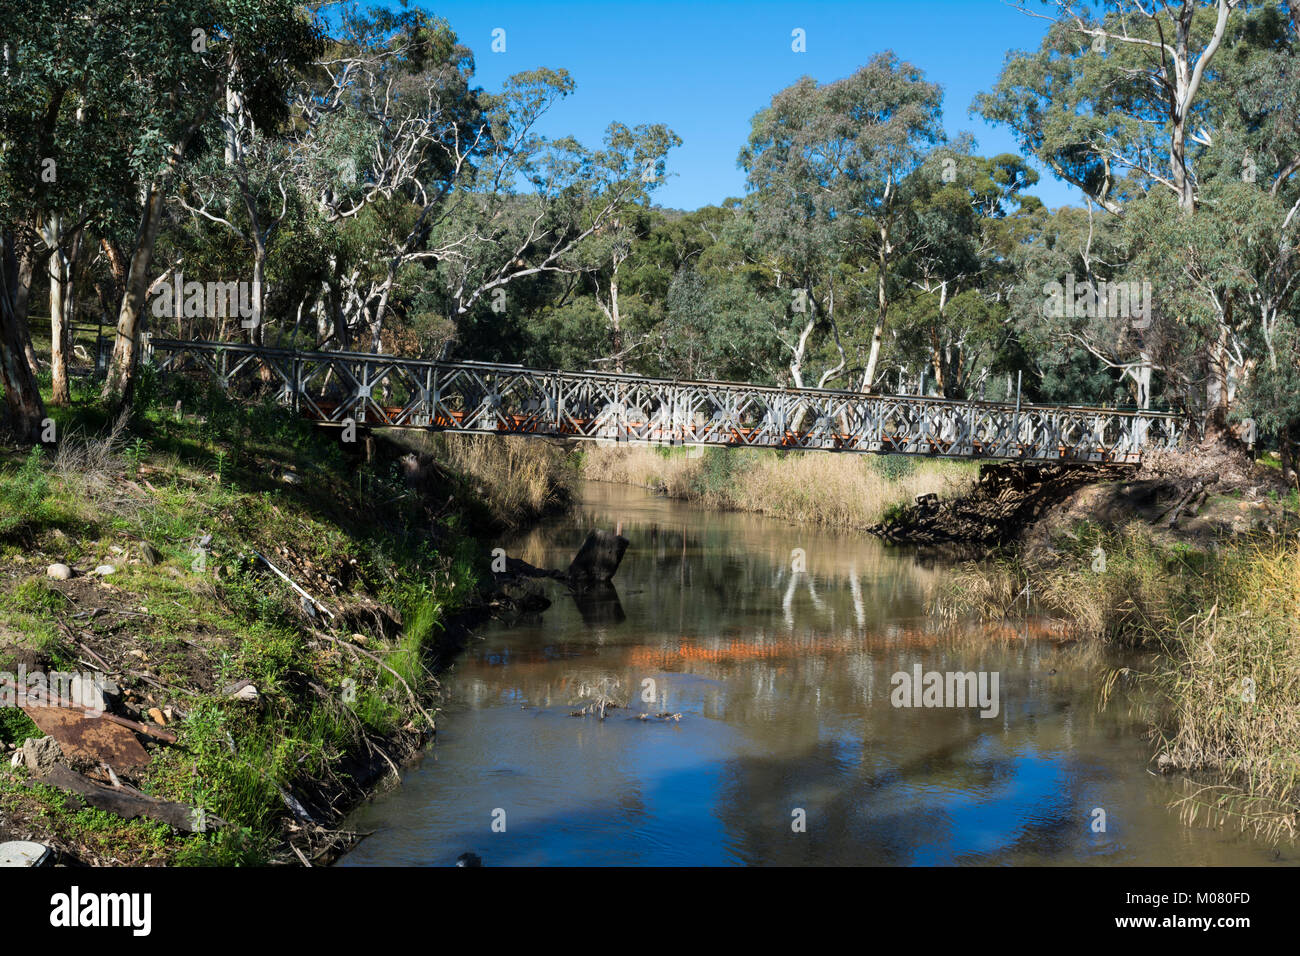 Kangarilla, South Australia, Australia: July 1, 2017 - Old disused and partially dismantled bridge crossing the Onkaparinga River on Mount Bold Road n Stock Photo